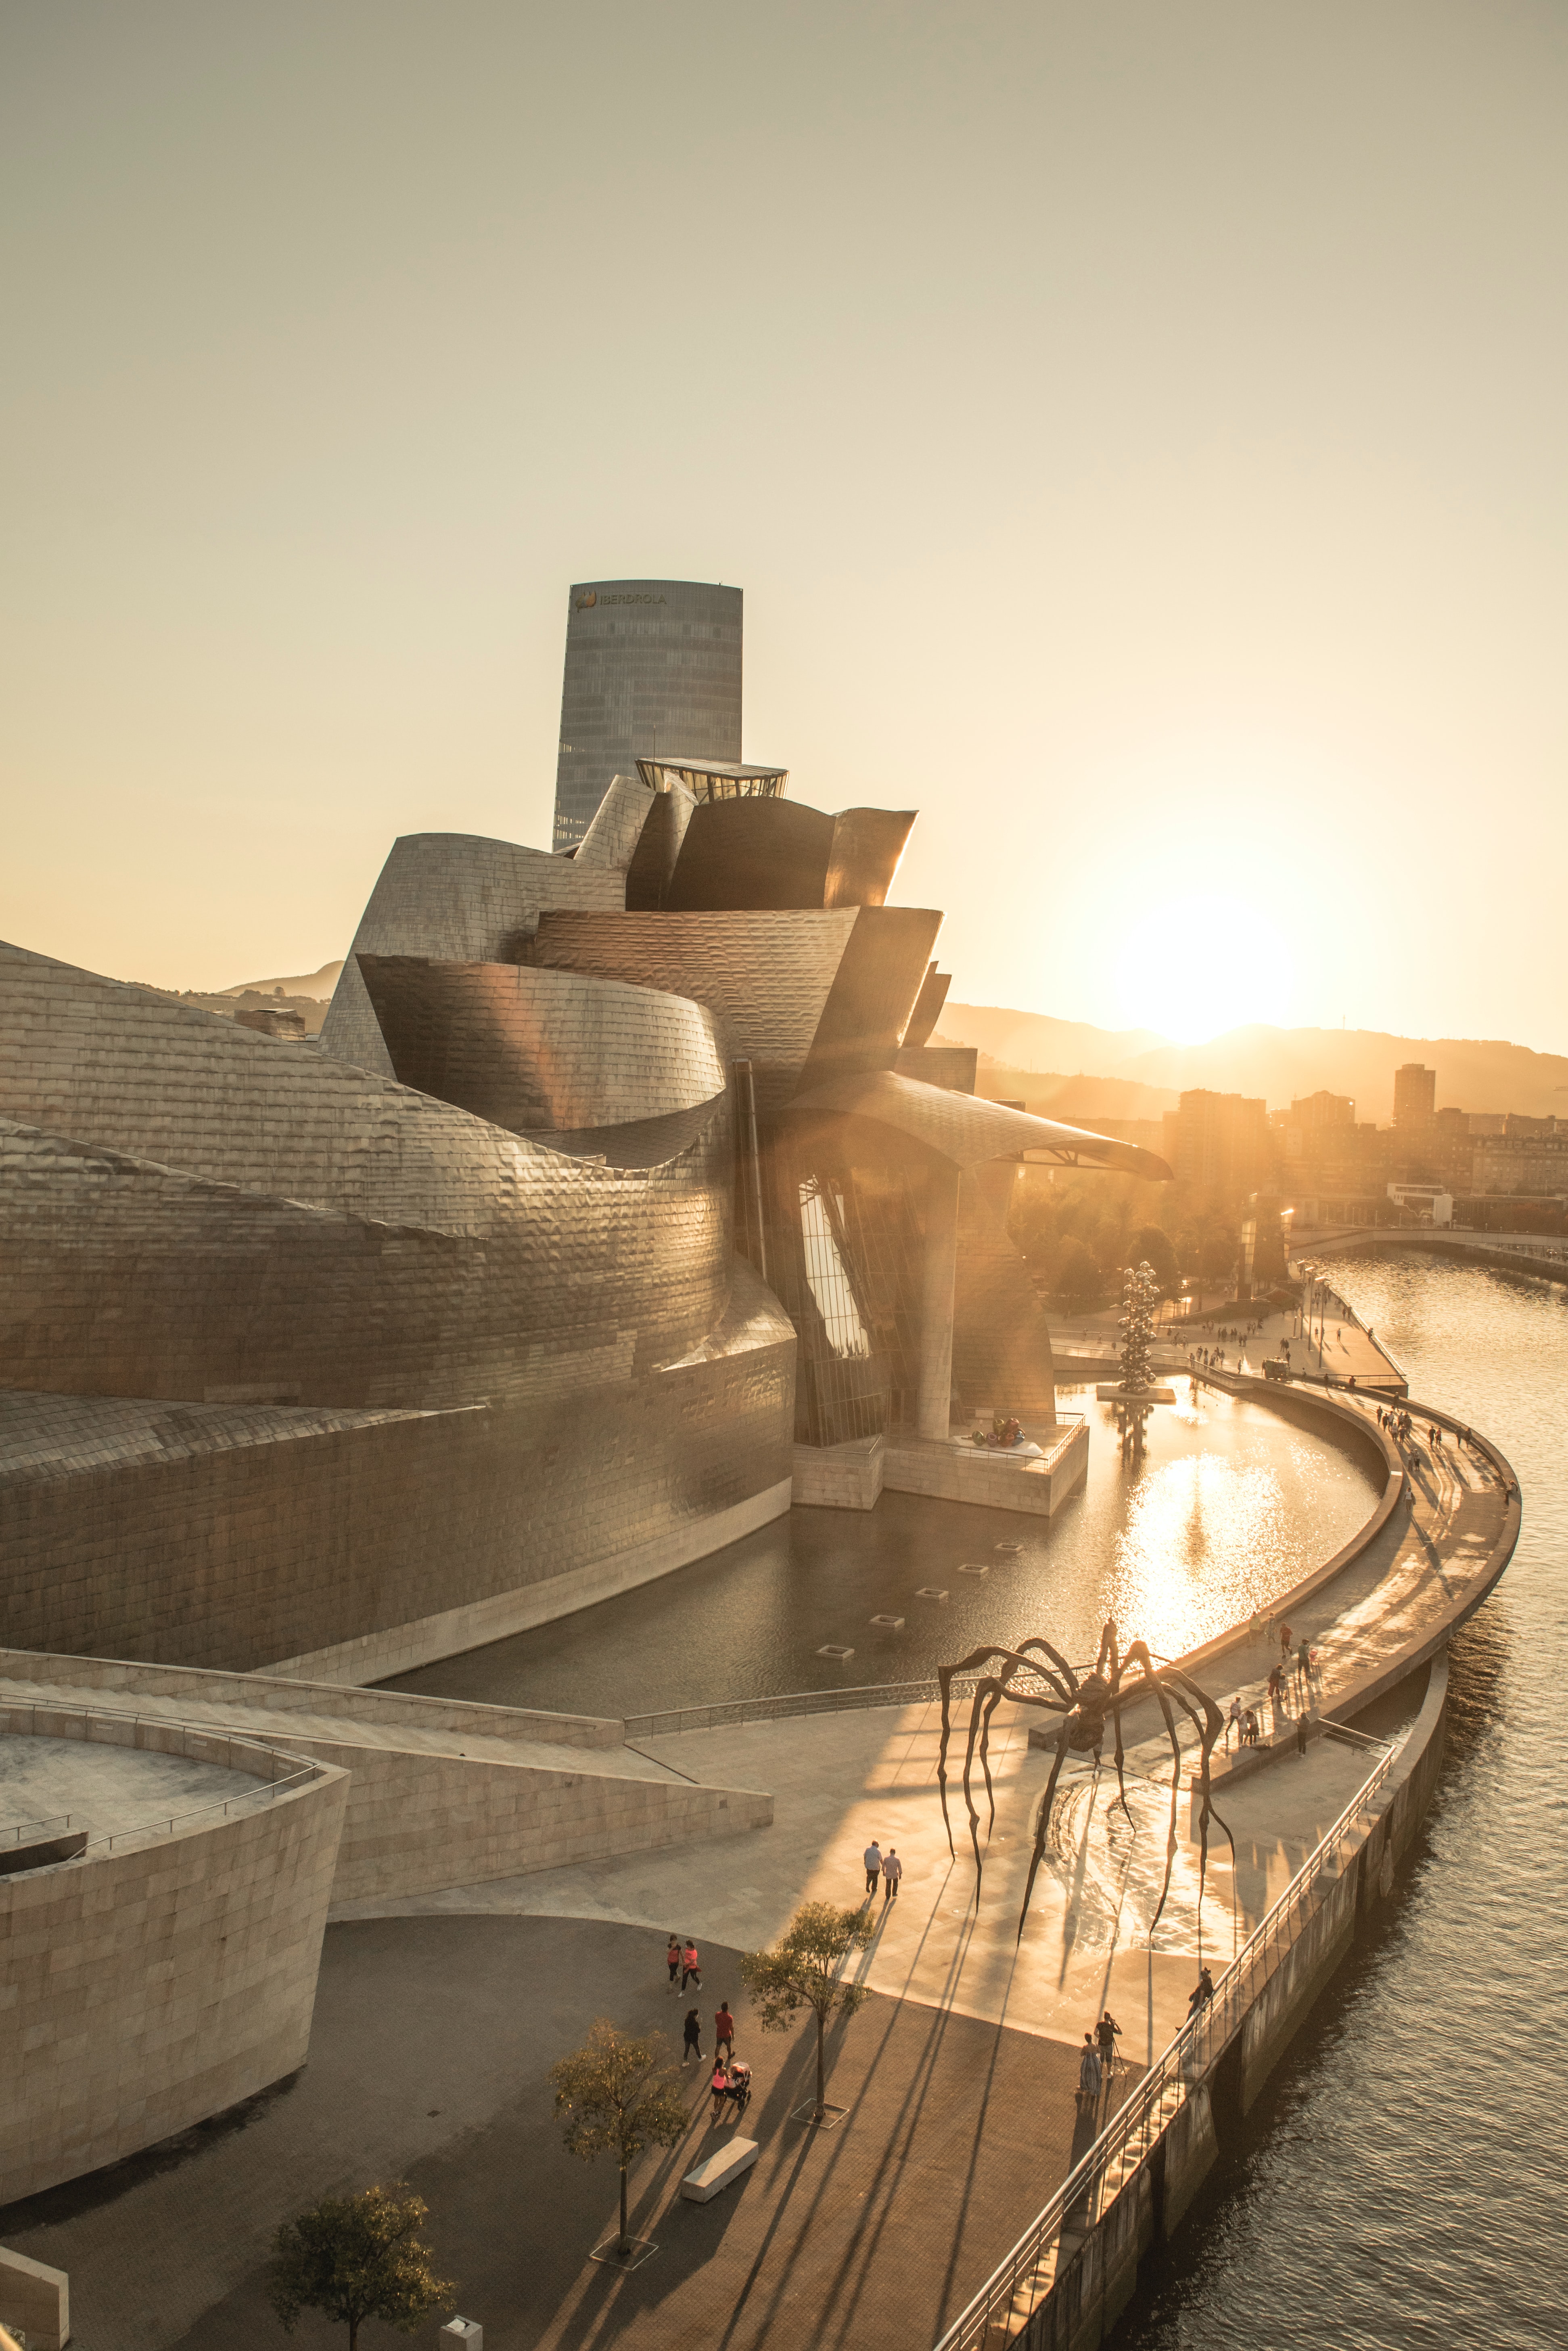 Bilbao Guggenheim museum with reflections